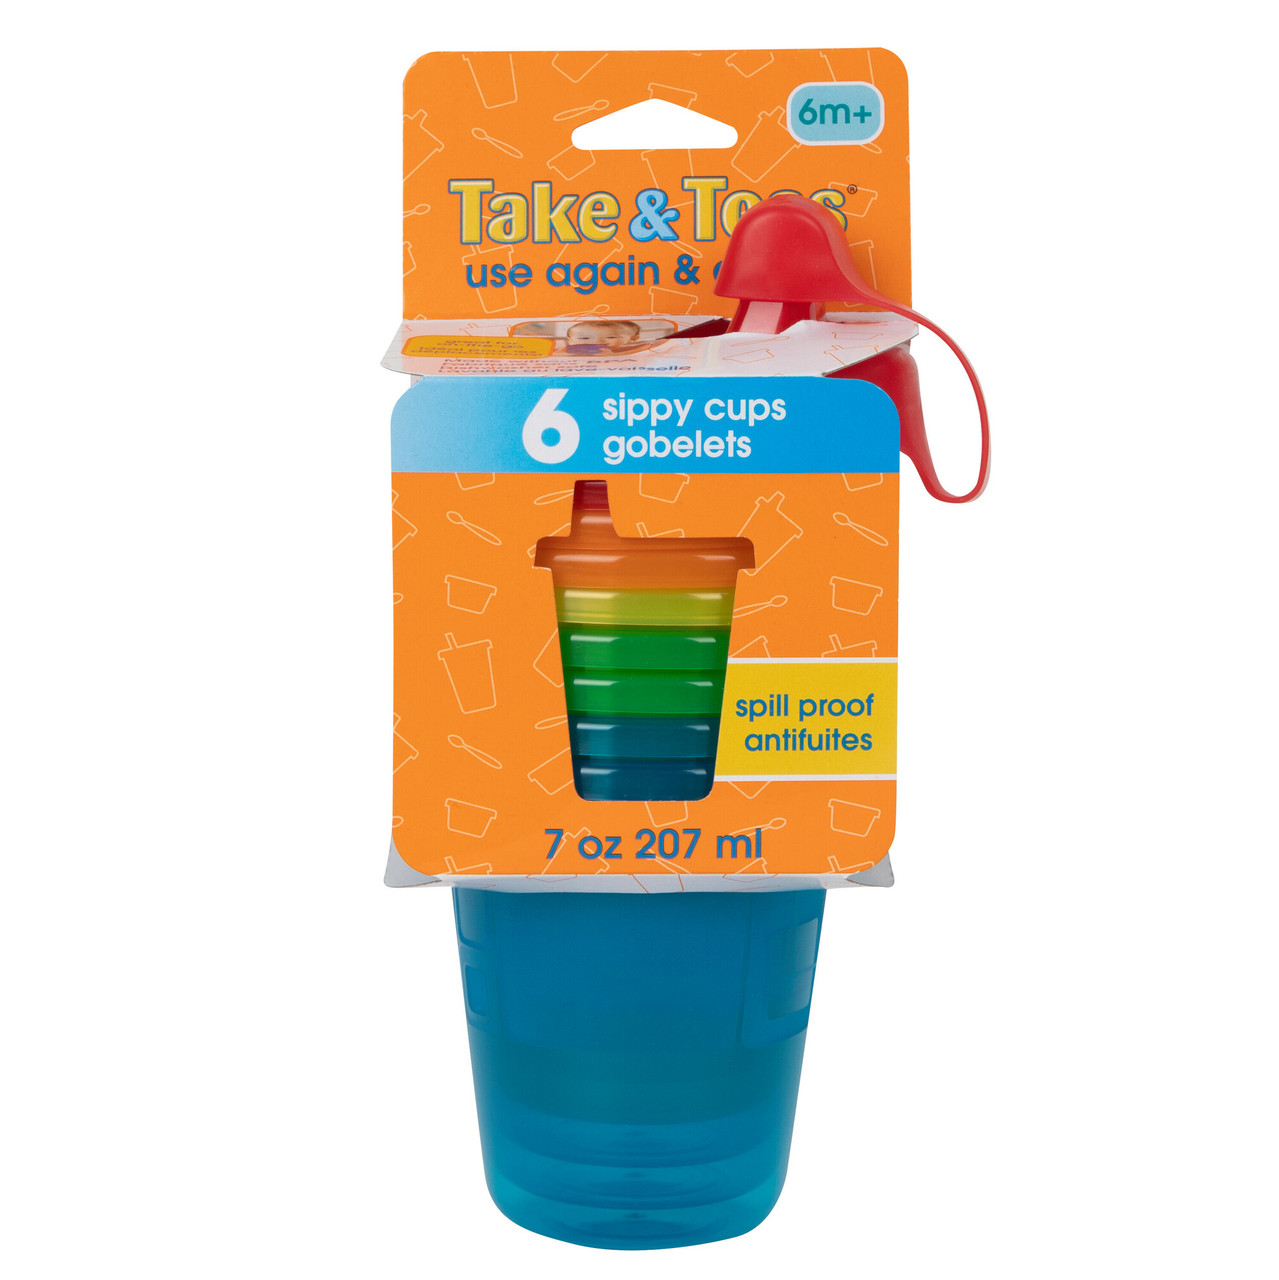 Munchkin Splash Toddler Cups with Training Lids 7 oz 4 Pack